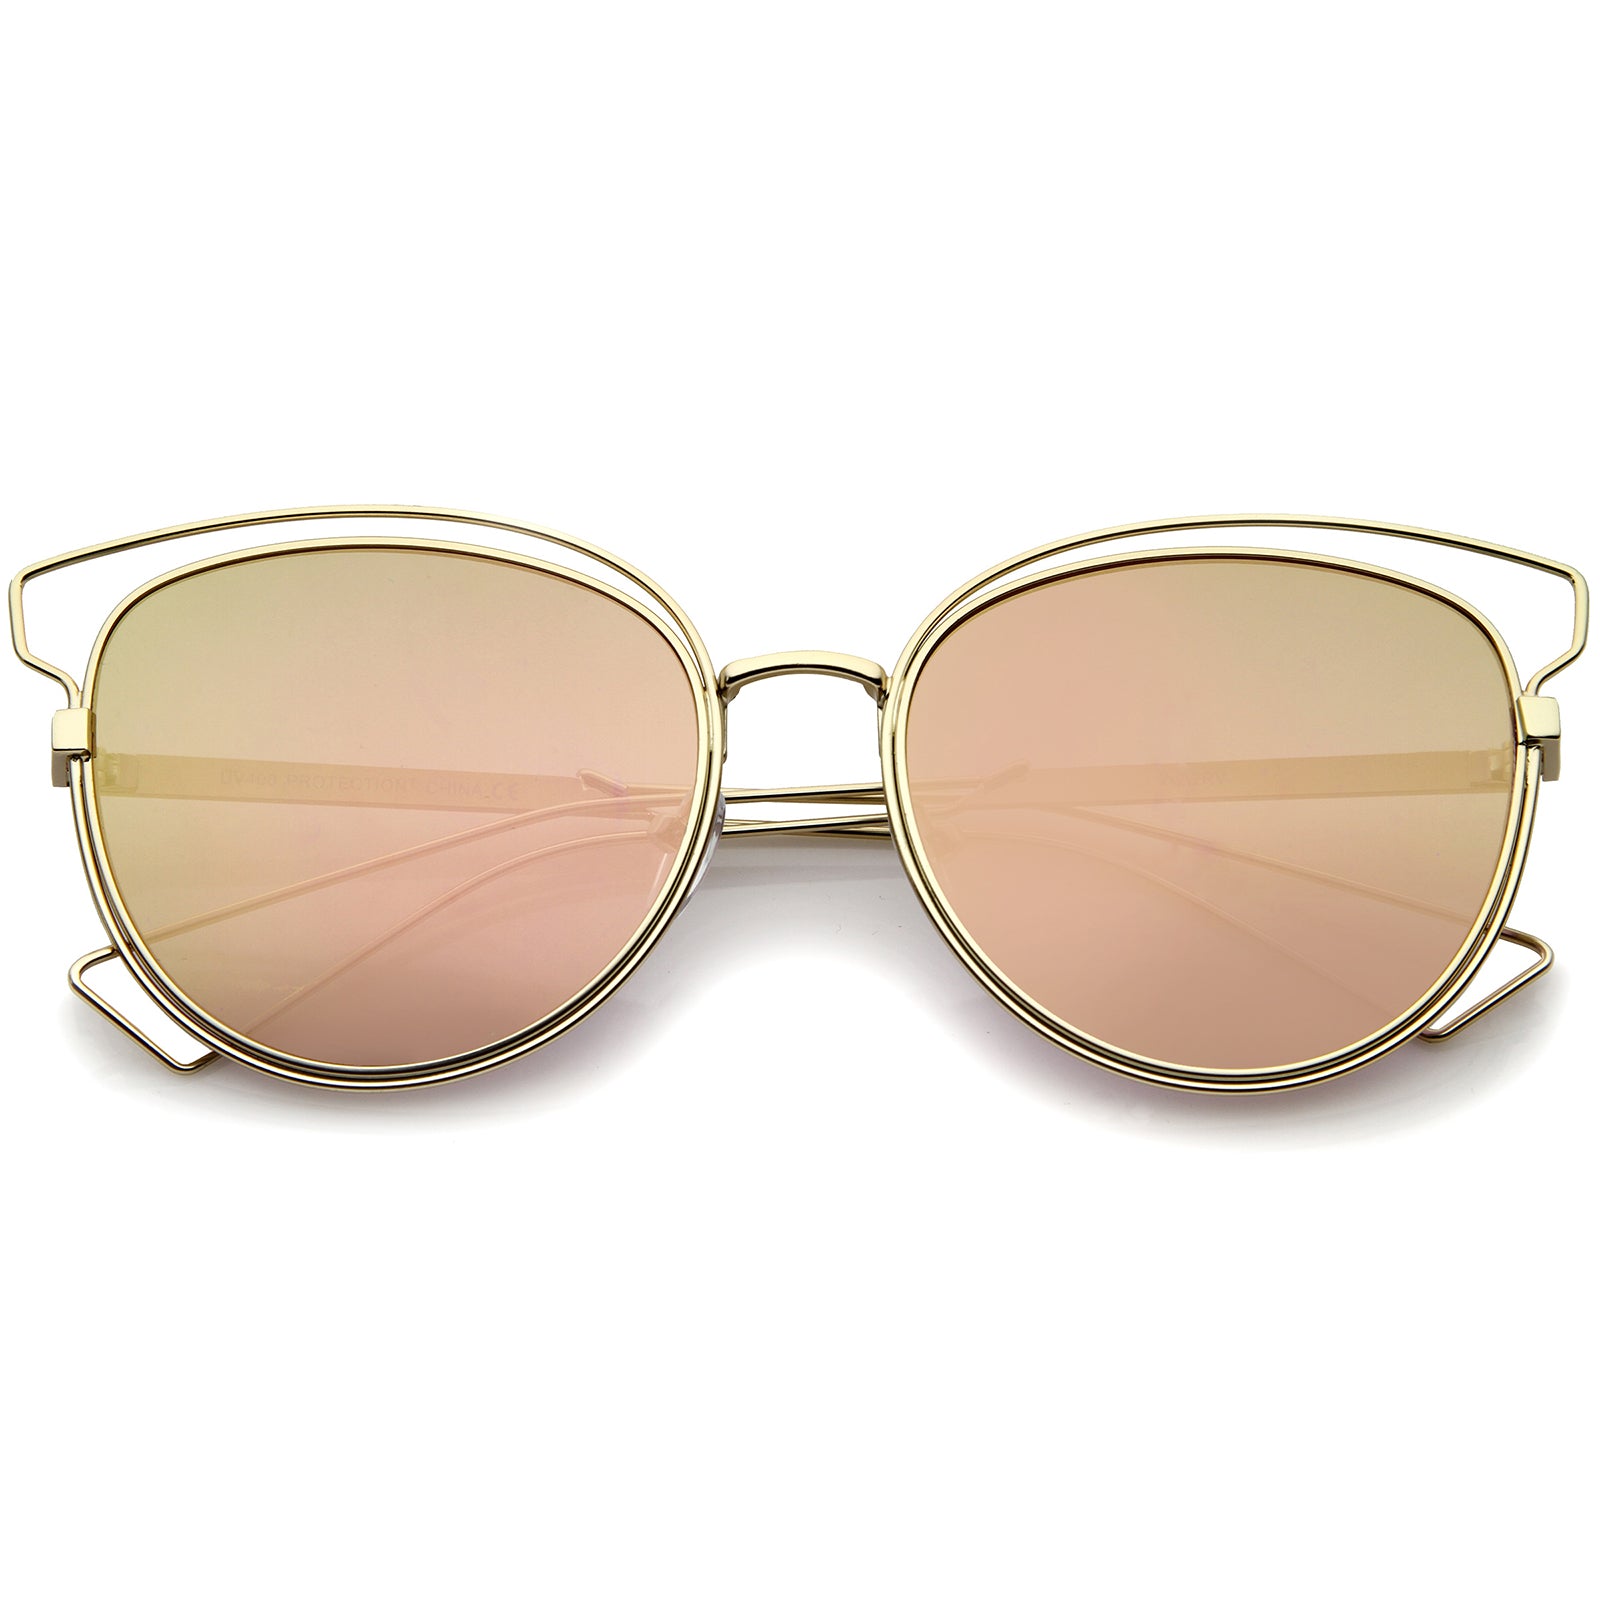 sunglass.la Womens Cat Eye Sunglasses with UV400 Protected Mirrored Lens